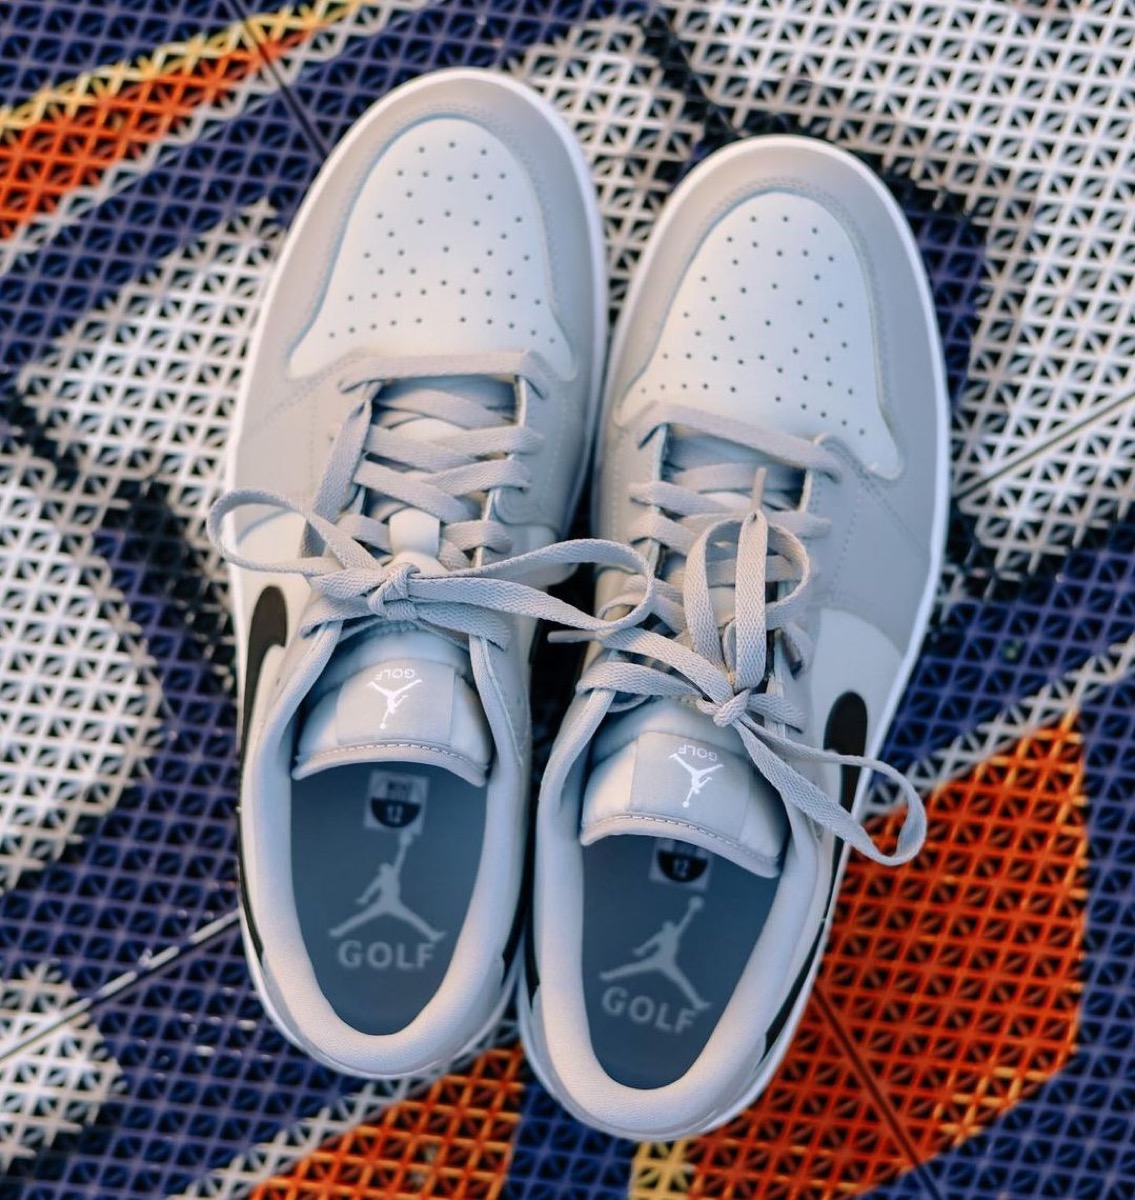 Nike Air Jordan 1 Low Golf “Wolf Grey”が国内8月6日に再販予定 | UP TO DATE